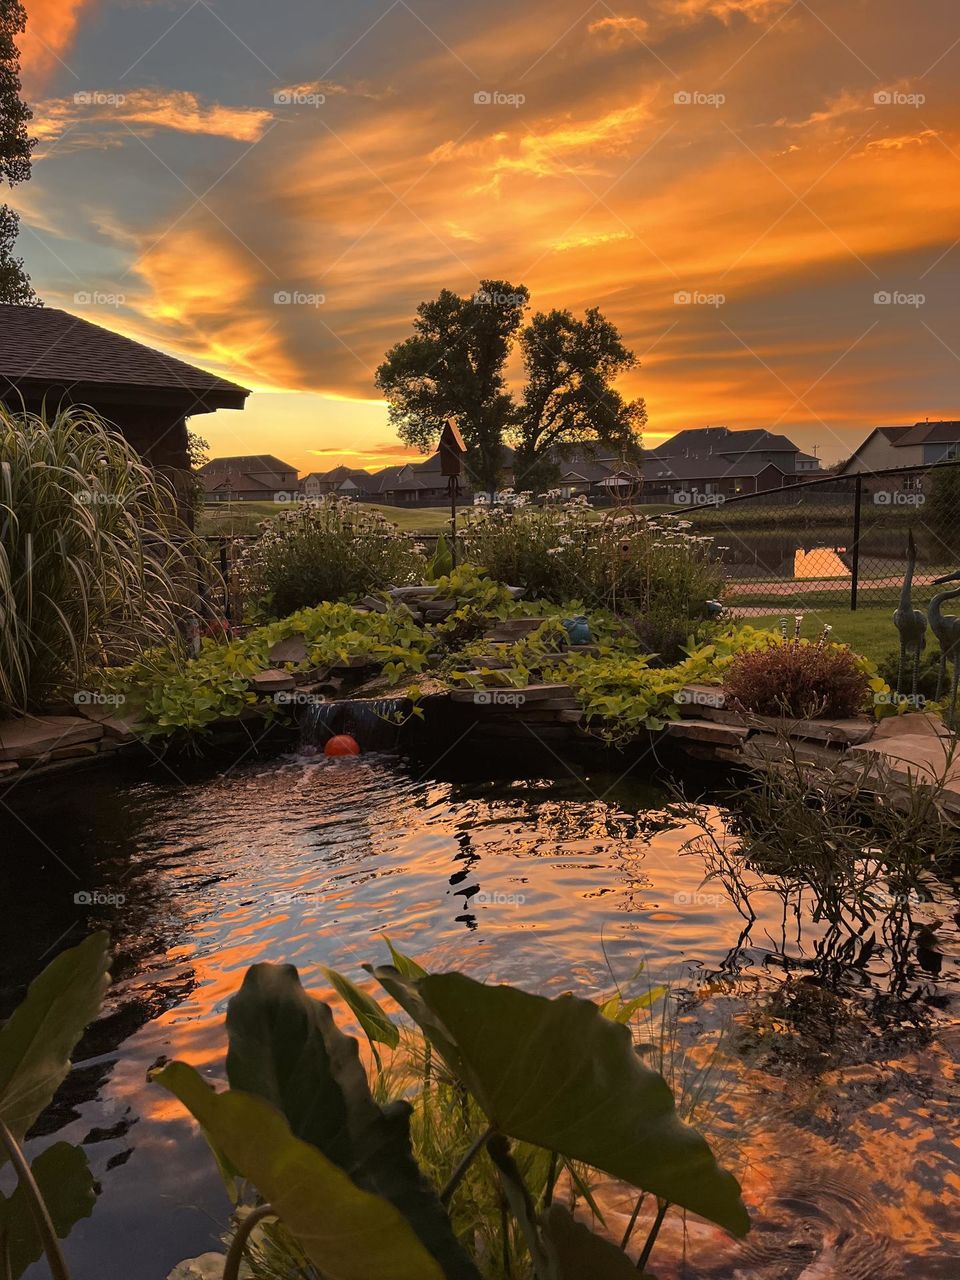 Oklahoma Sunset on the Pond